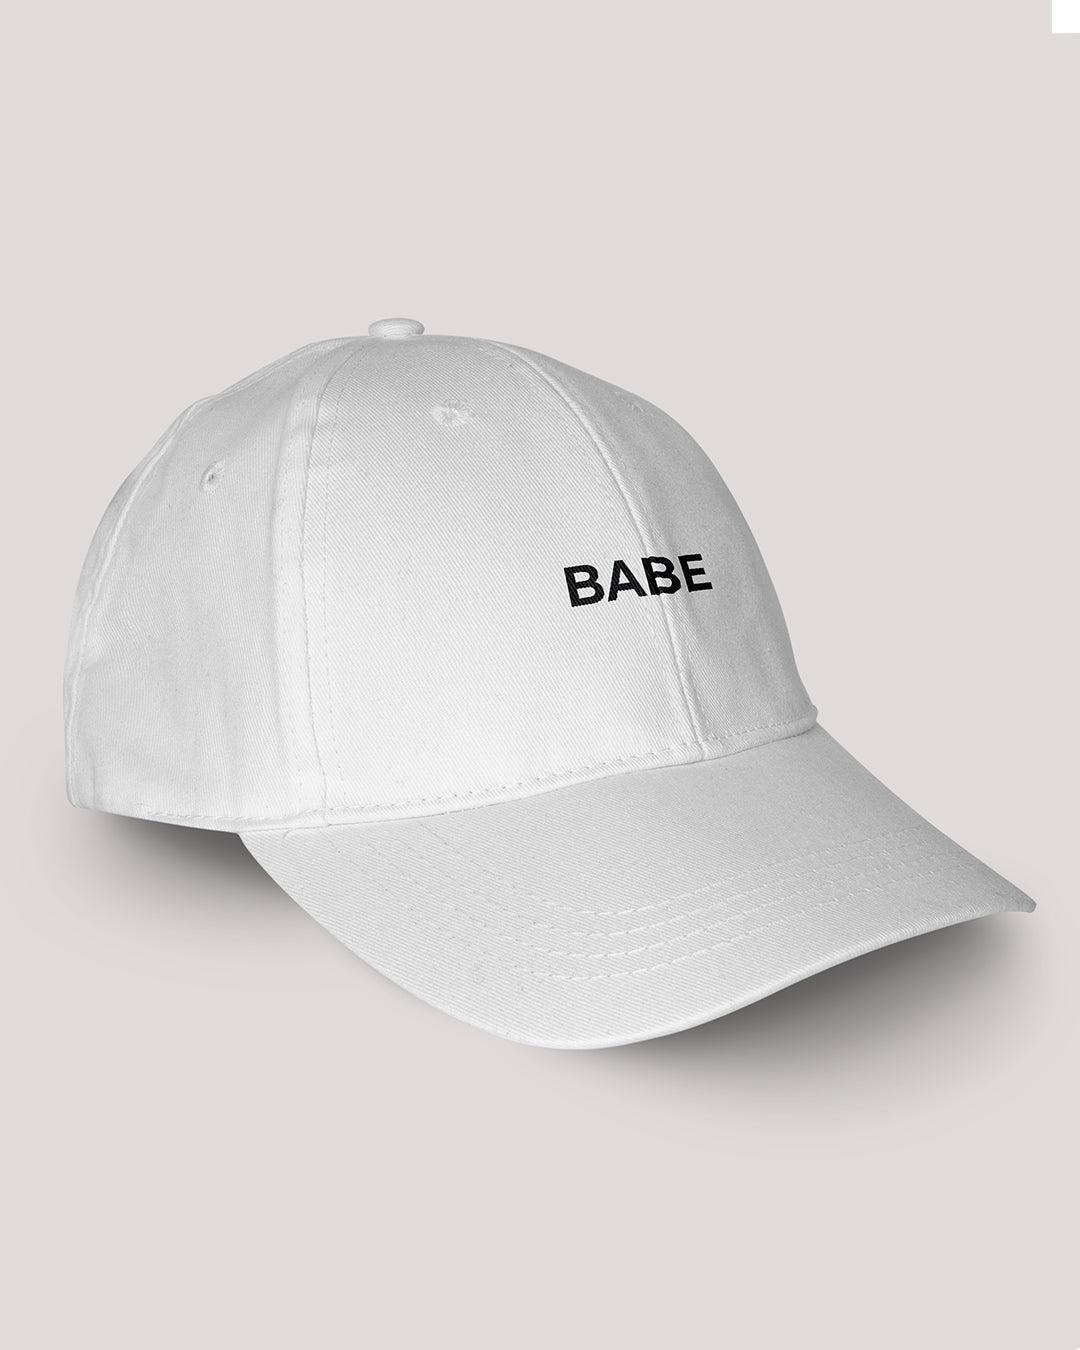 'BABE' Cap